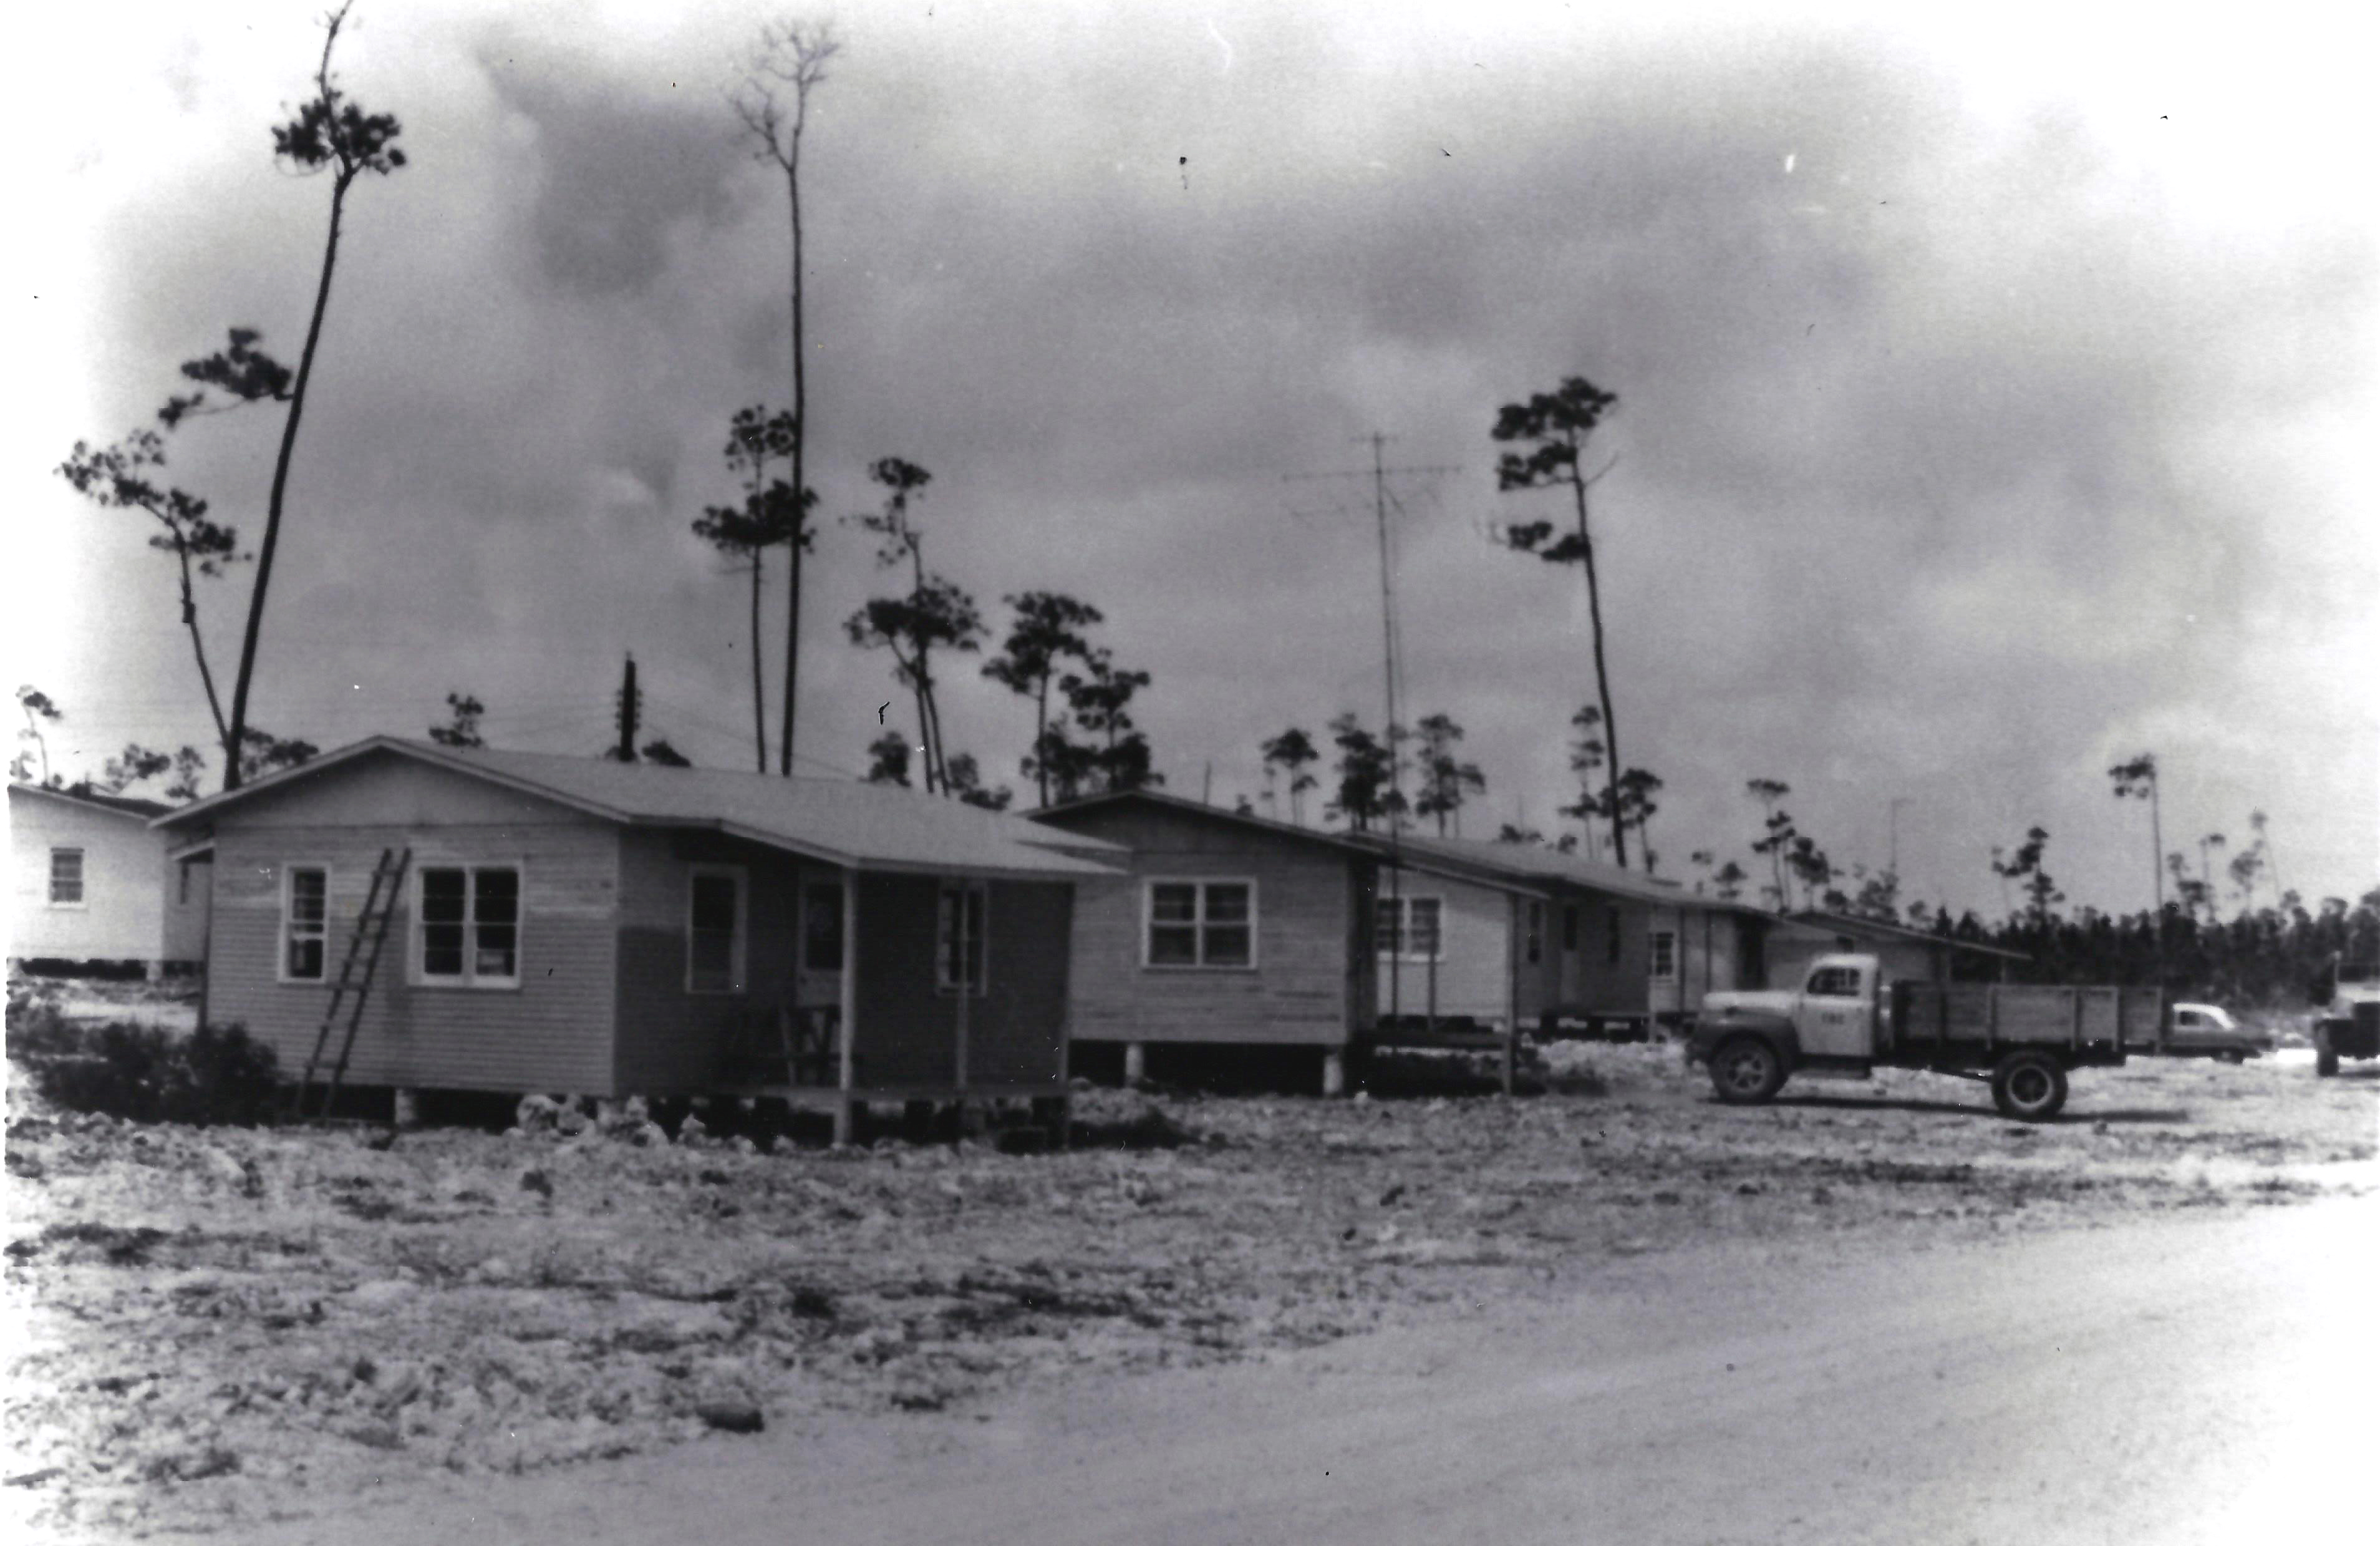 Freeport early housing, 1950's